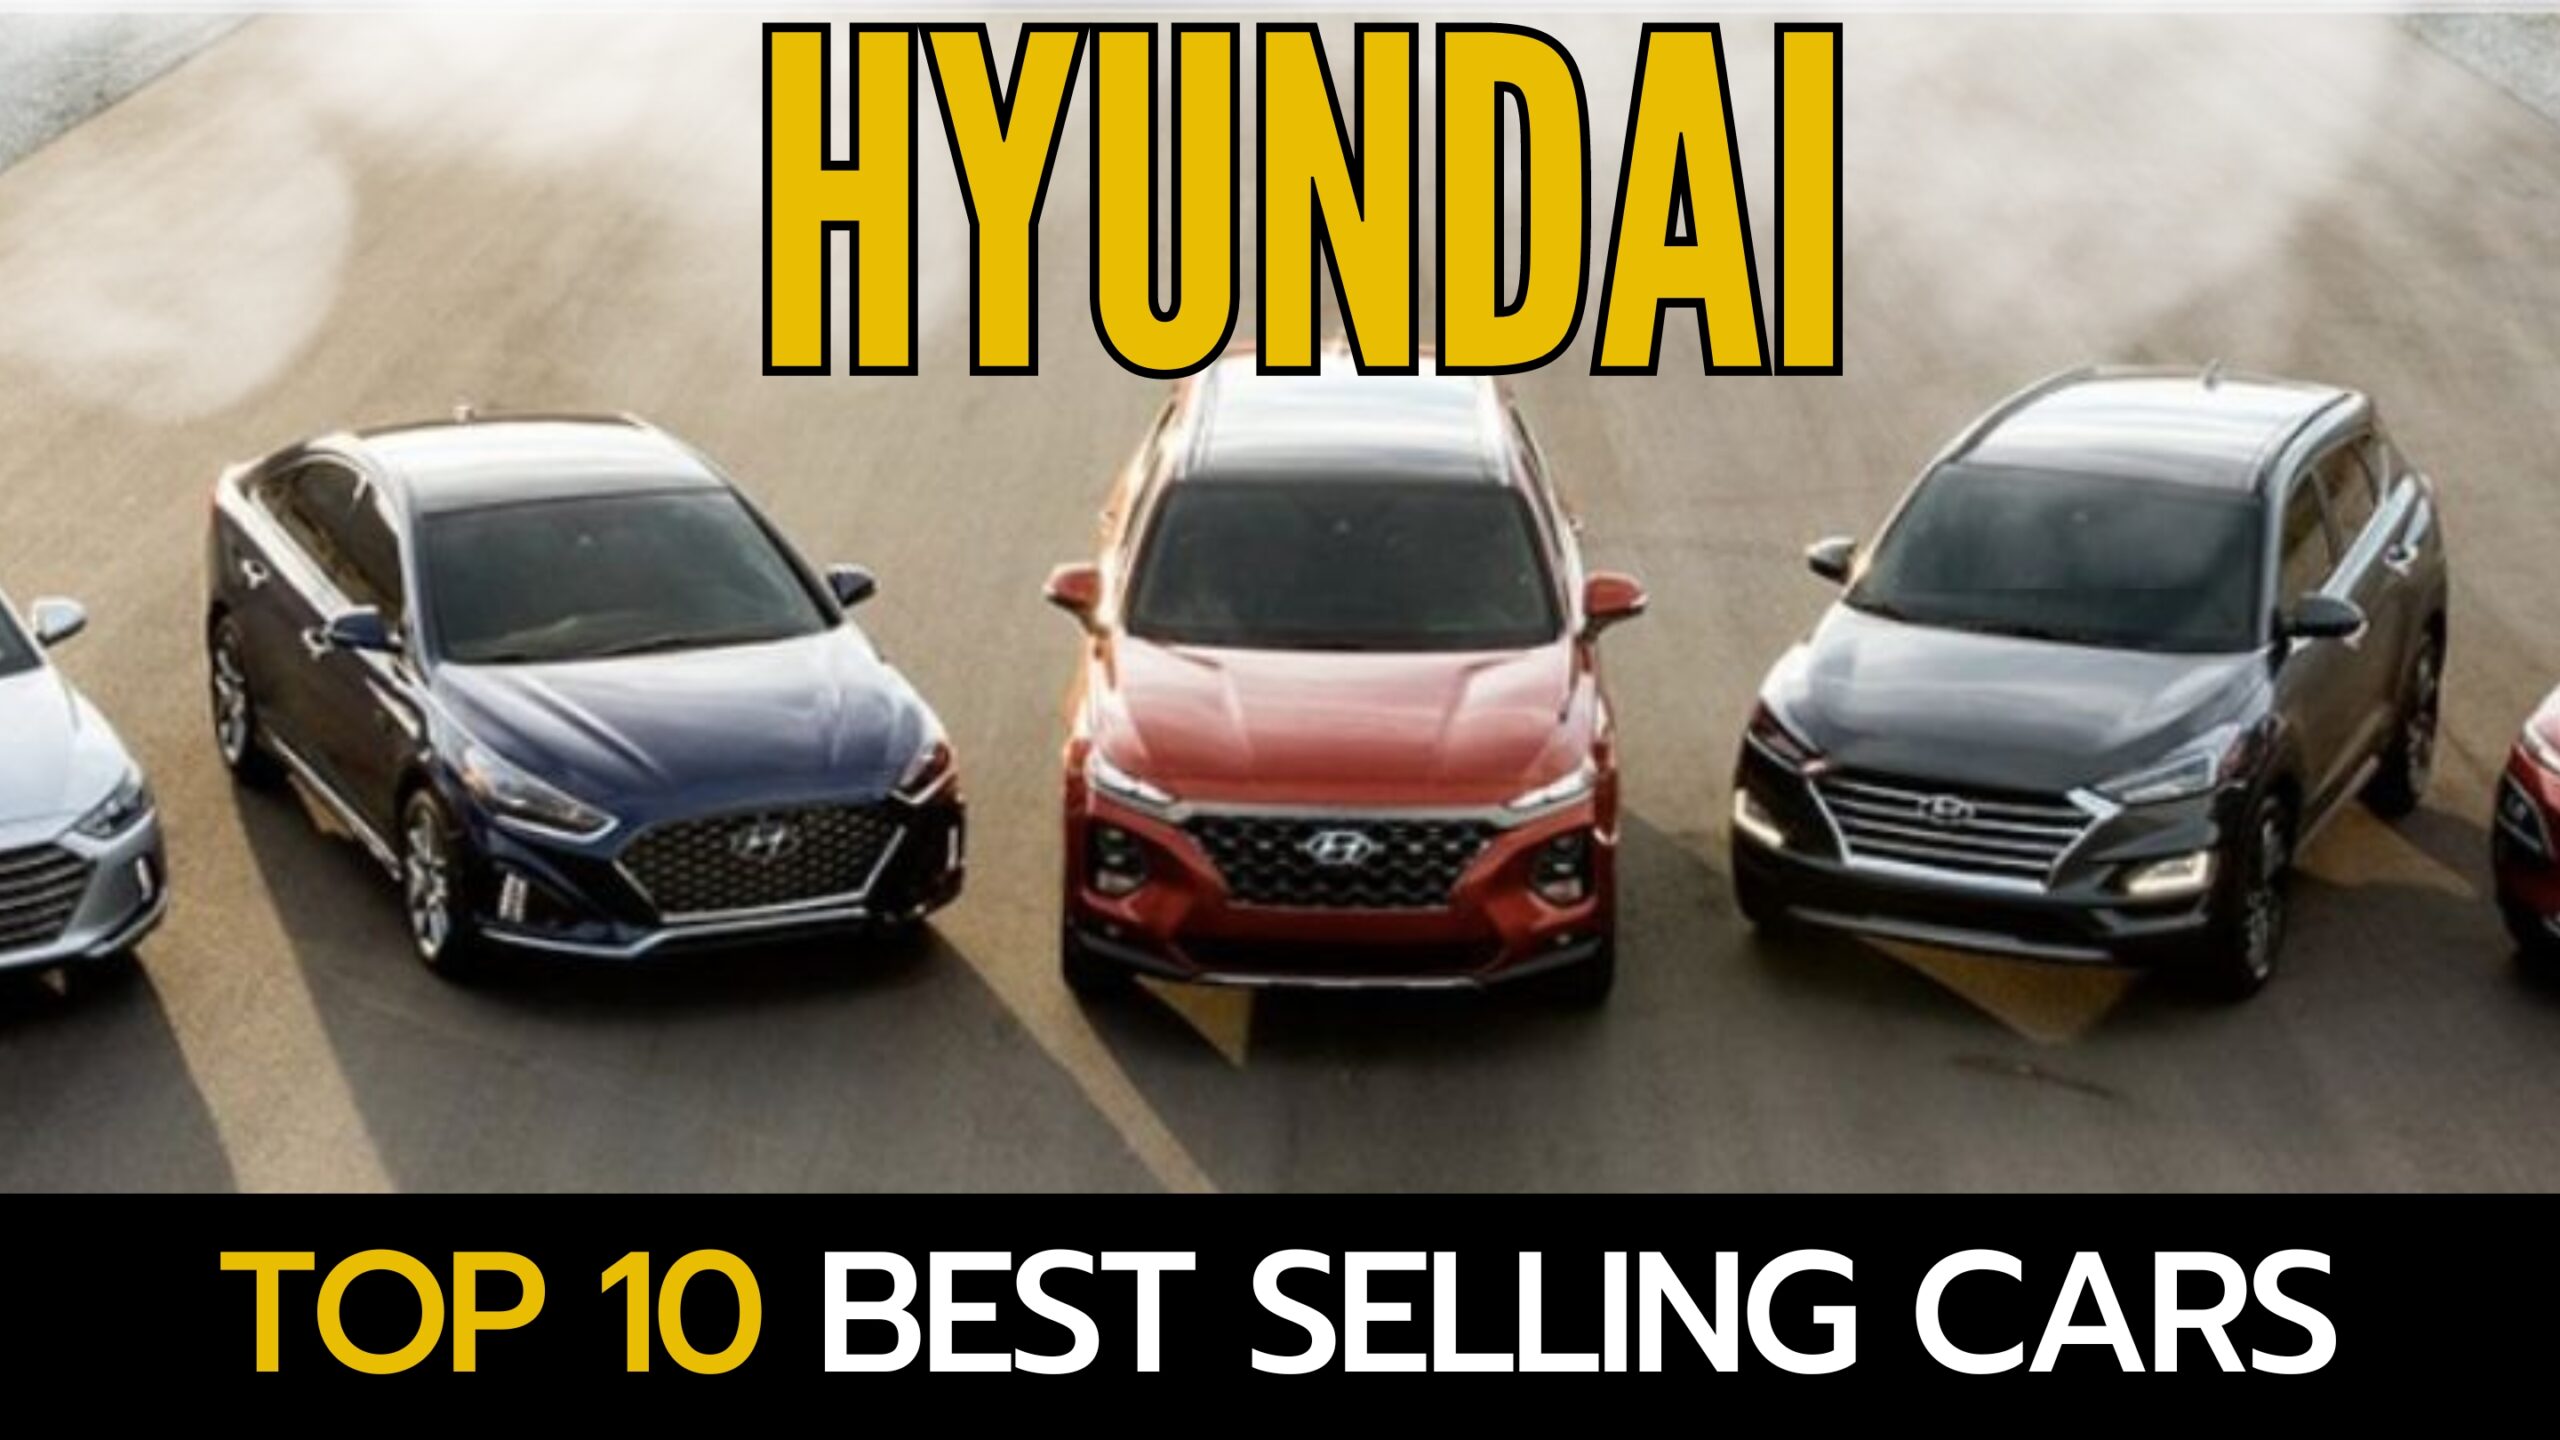 HYUNDAI Top 10 Best Selling Cars